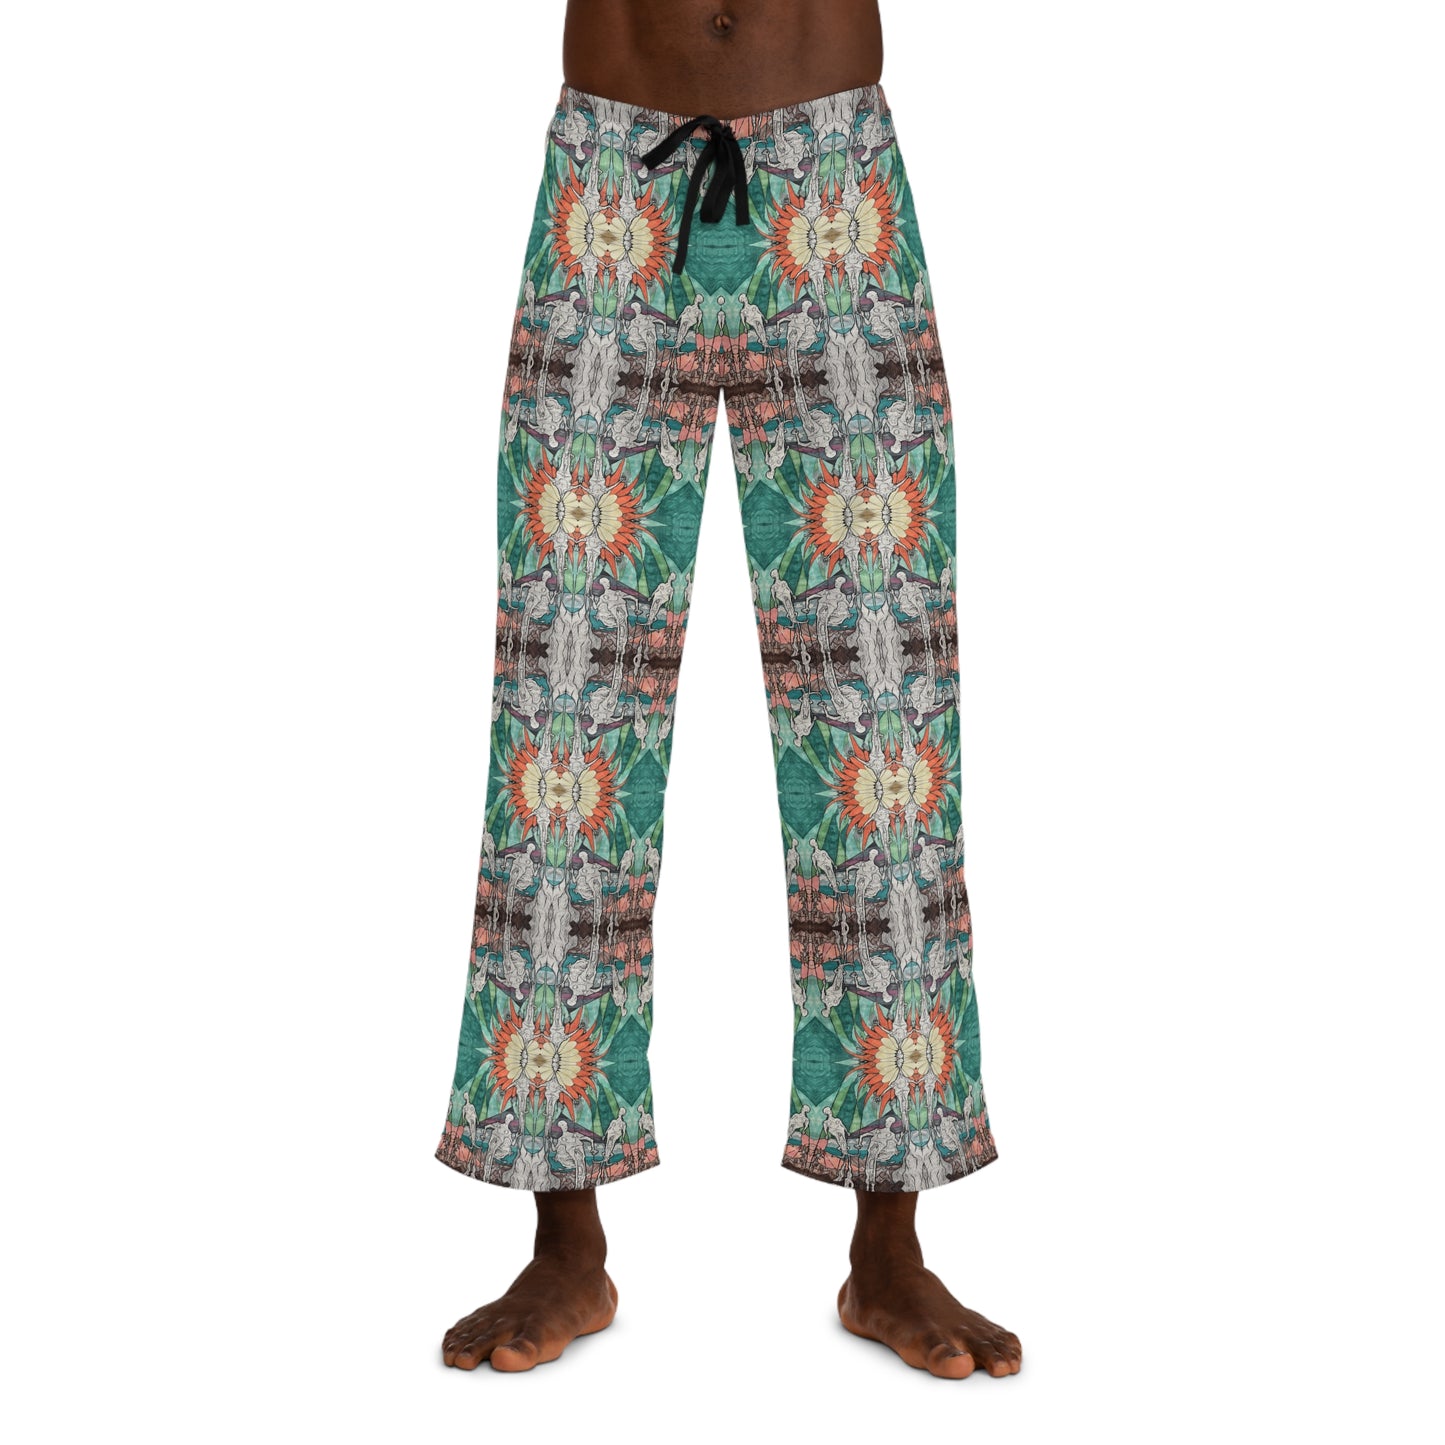 "Flowery People" Pajama Pants